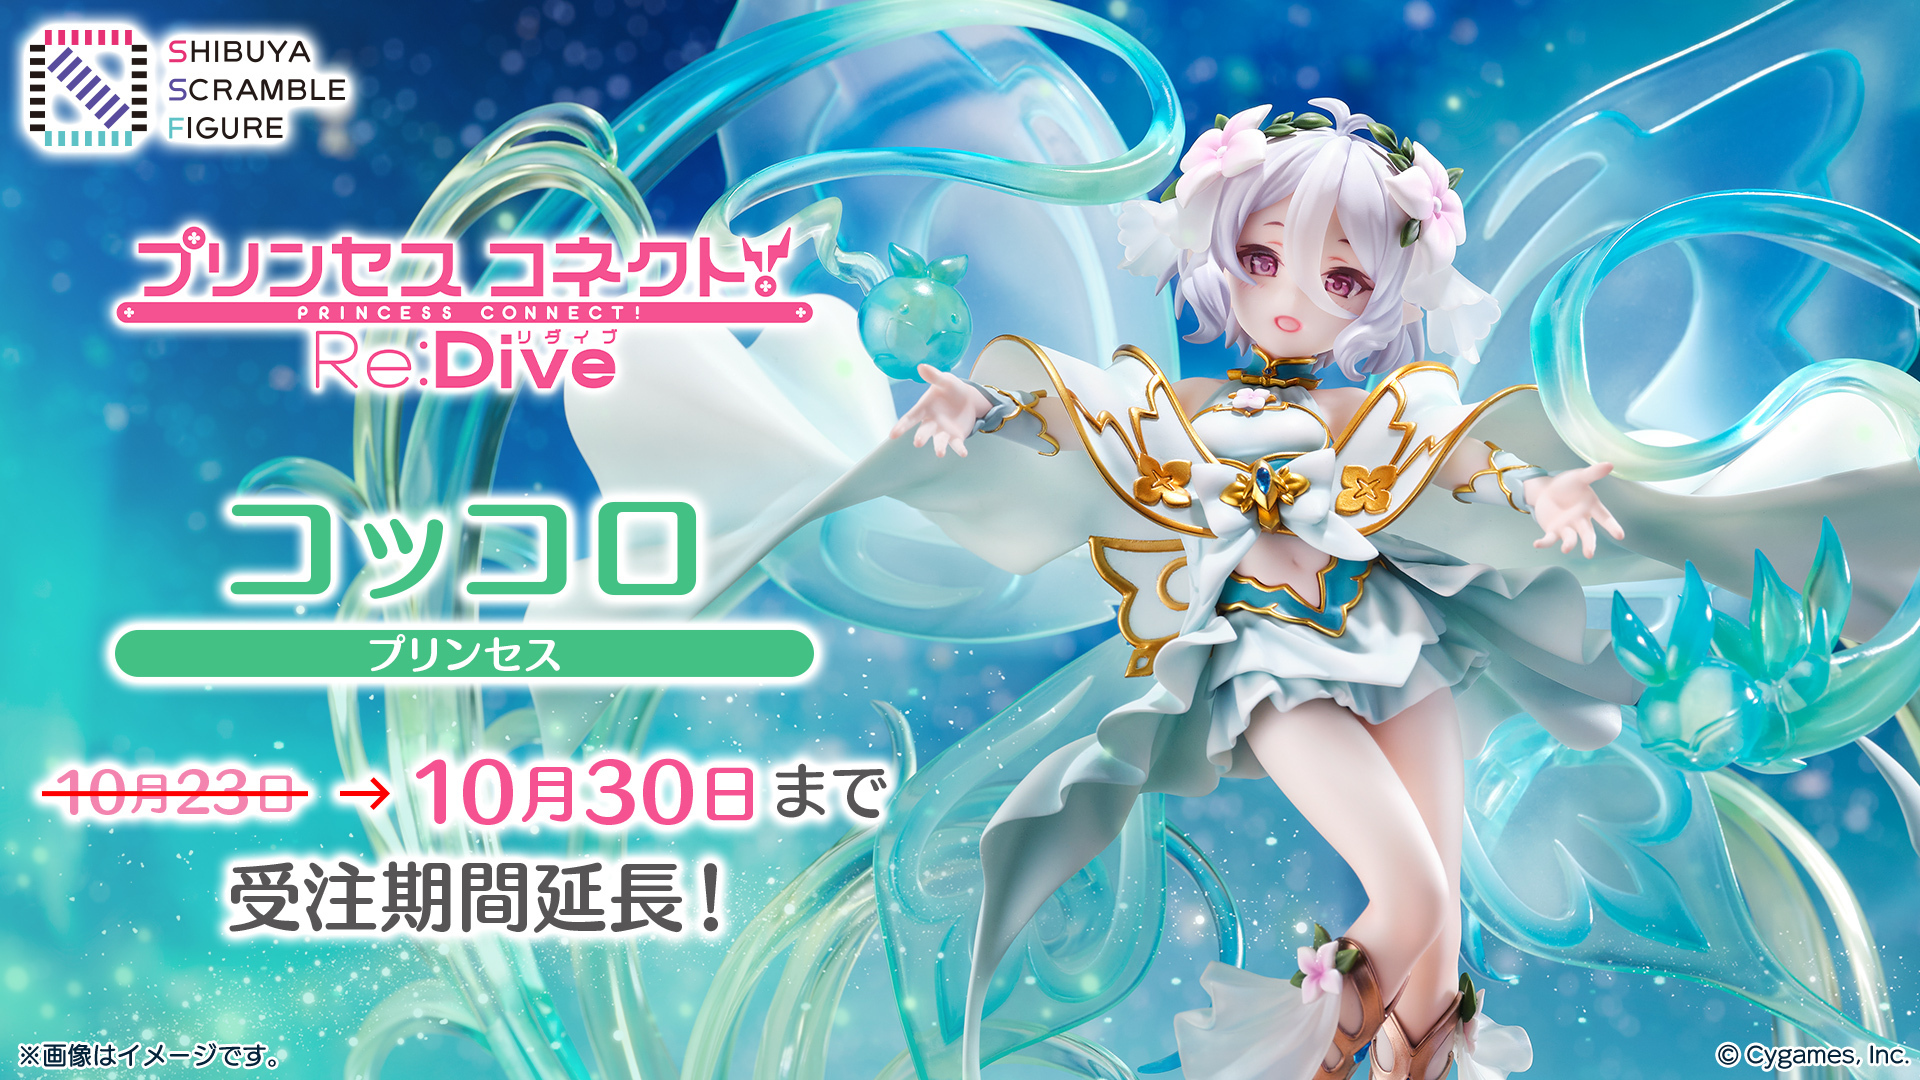 SHIBUYA SCRAMBLE FIGURE、アニメRPG『プリンセスコネクト！Re:Dive 